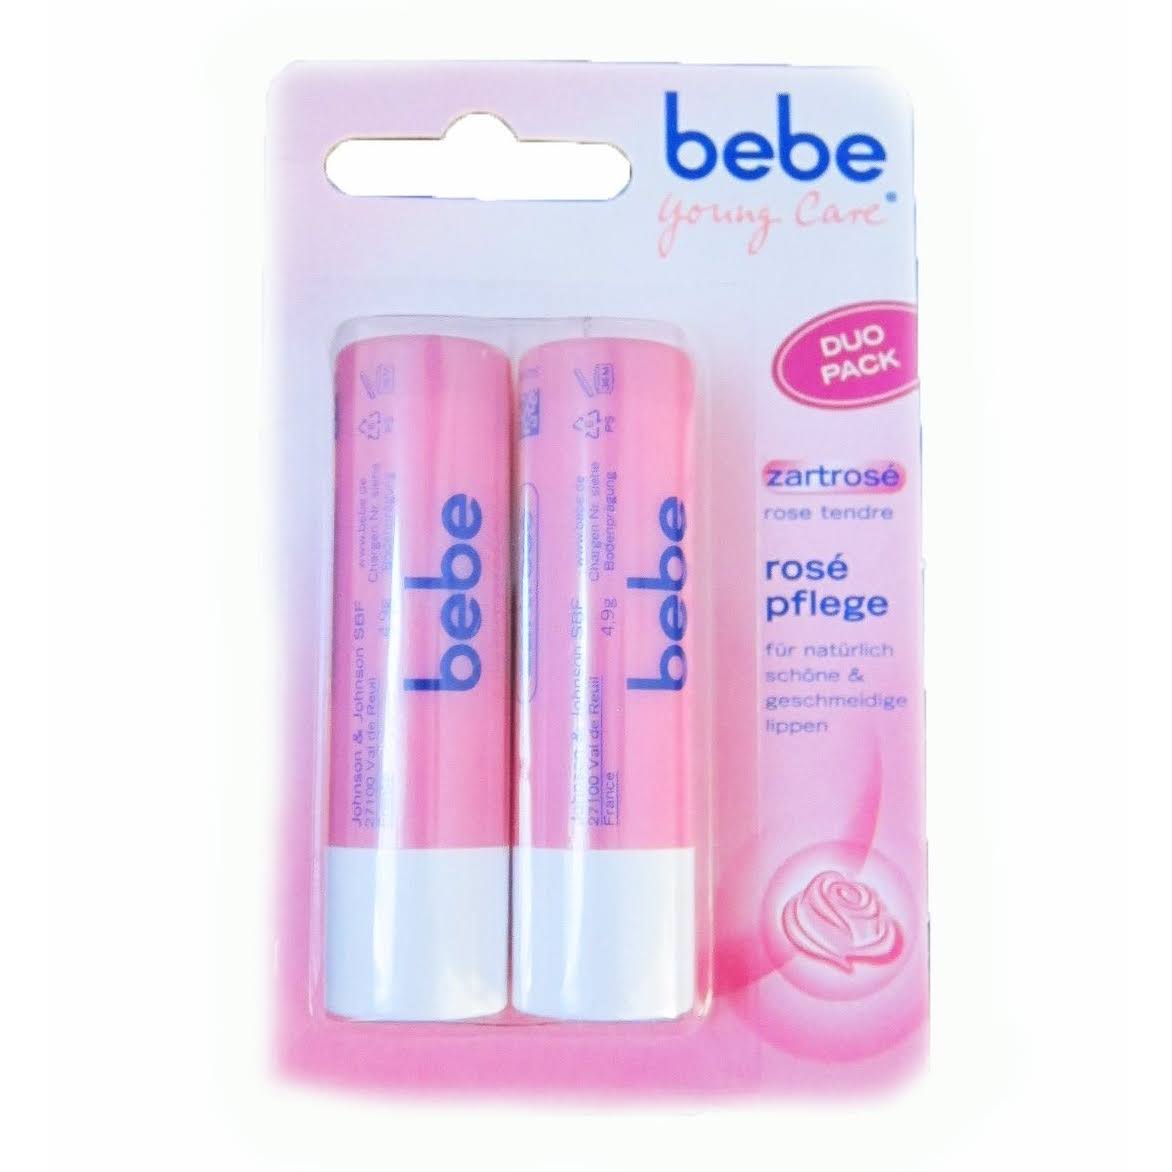 Bebe Lip Balm Rose 4.9 G 0.17 oz 2 Pack